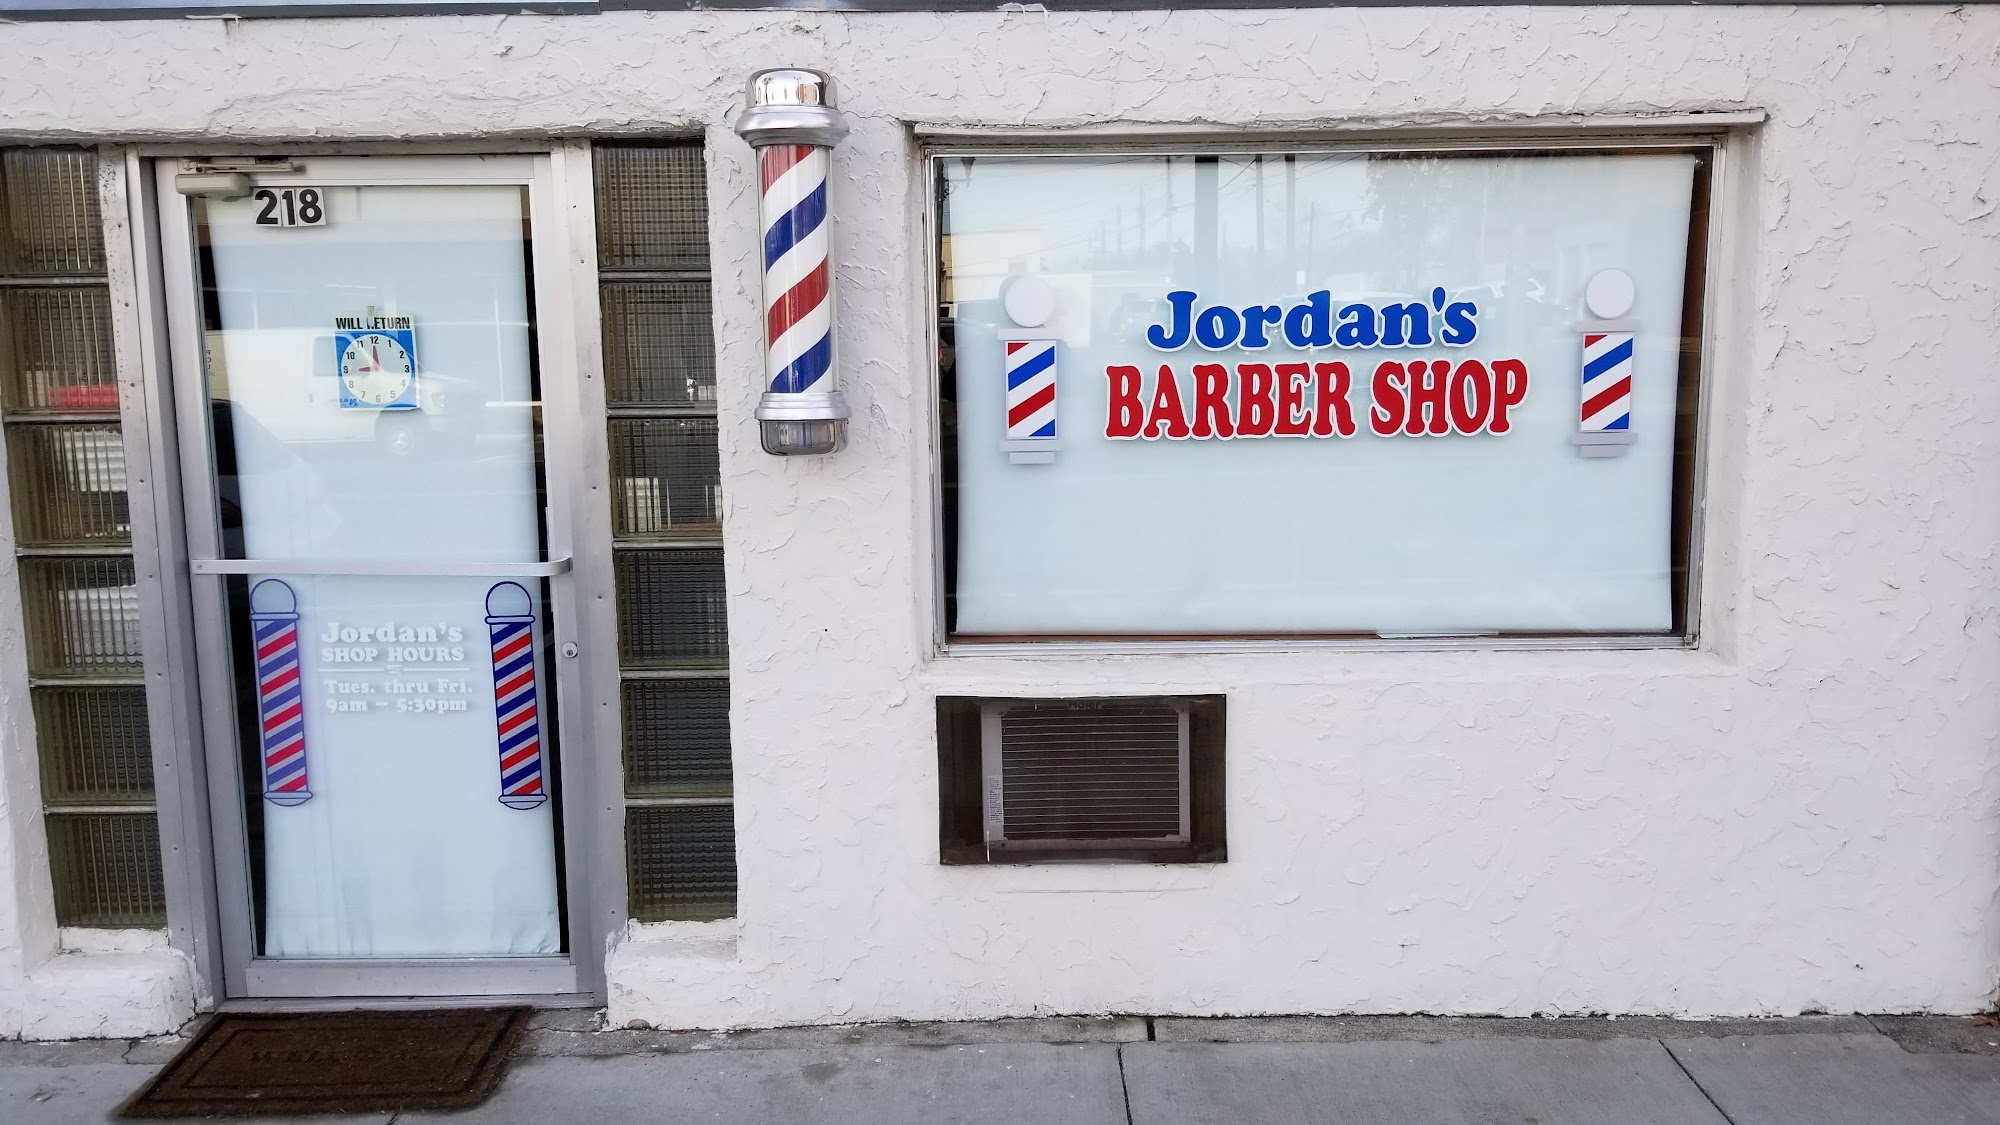 Jordan's Barbershop 216 Division Ave W, Ephrata Washington 98823